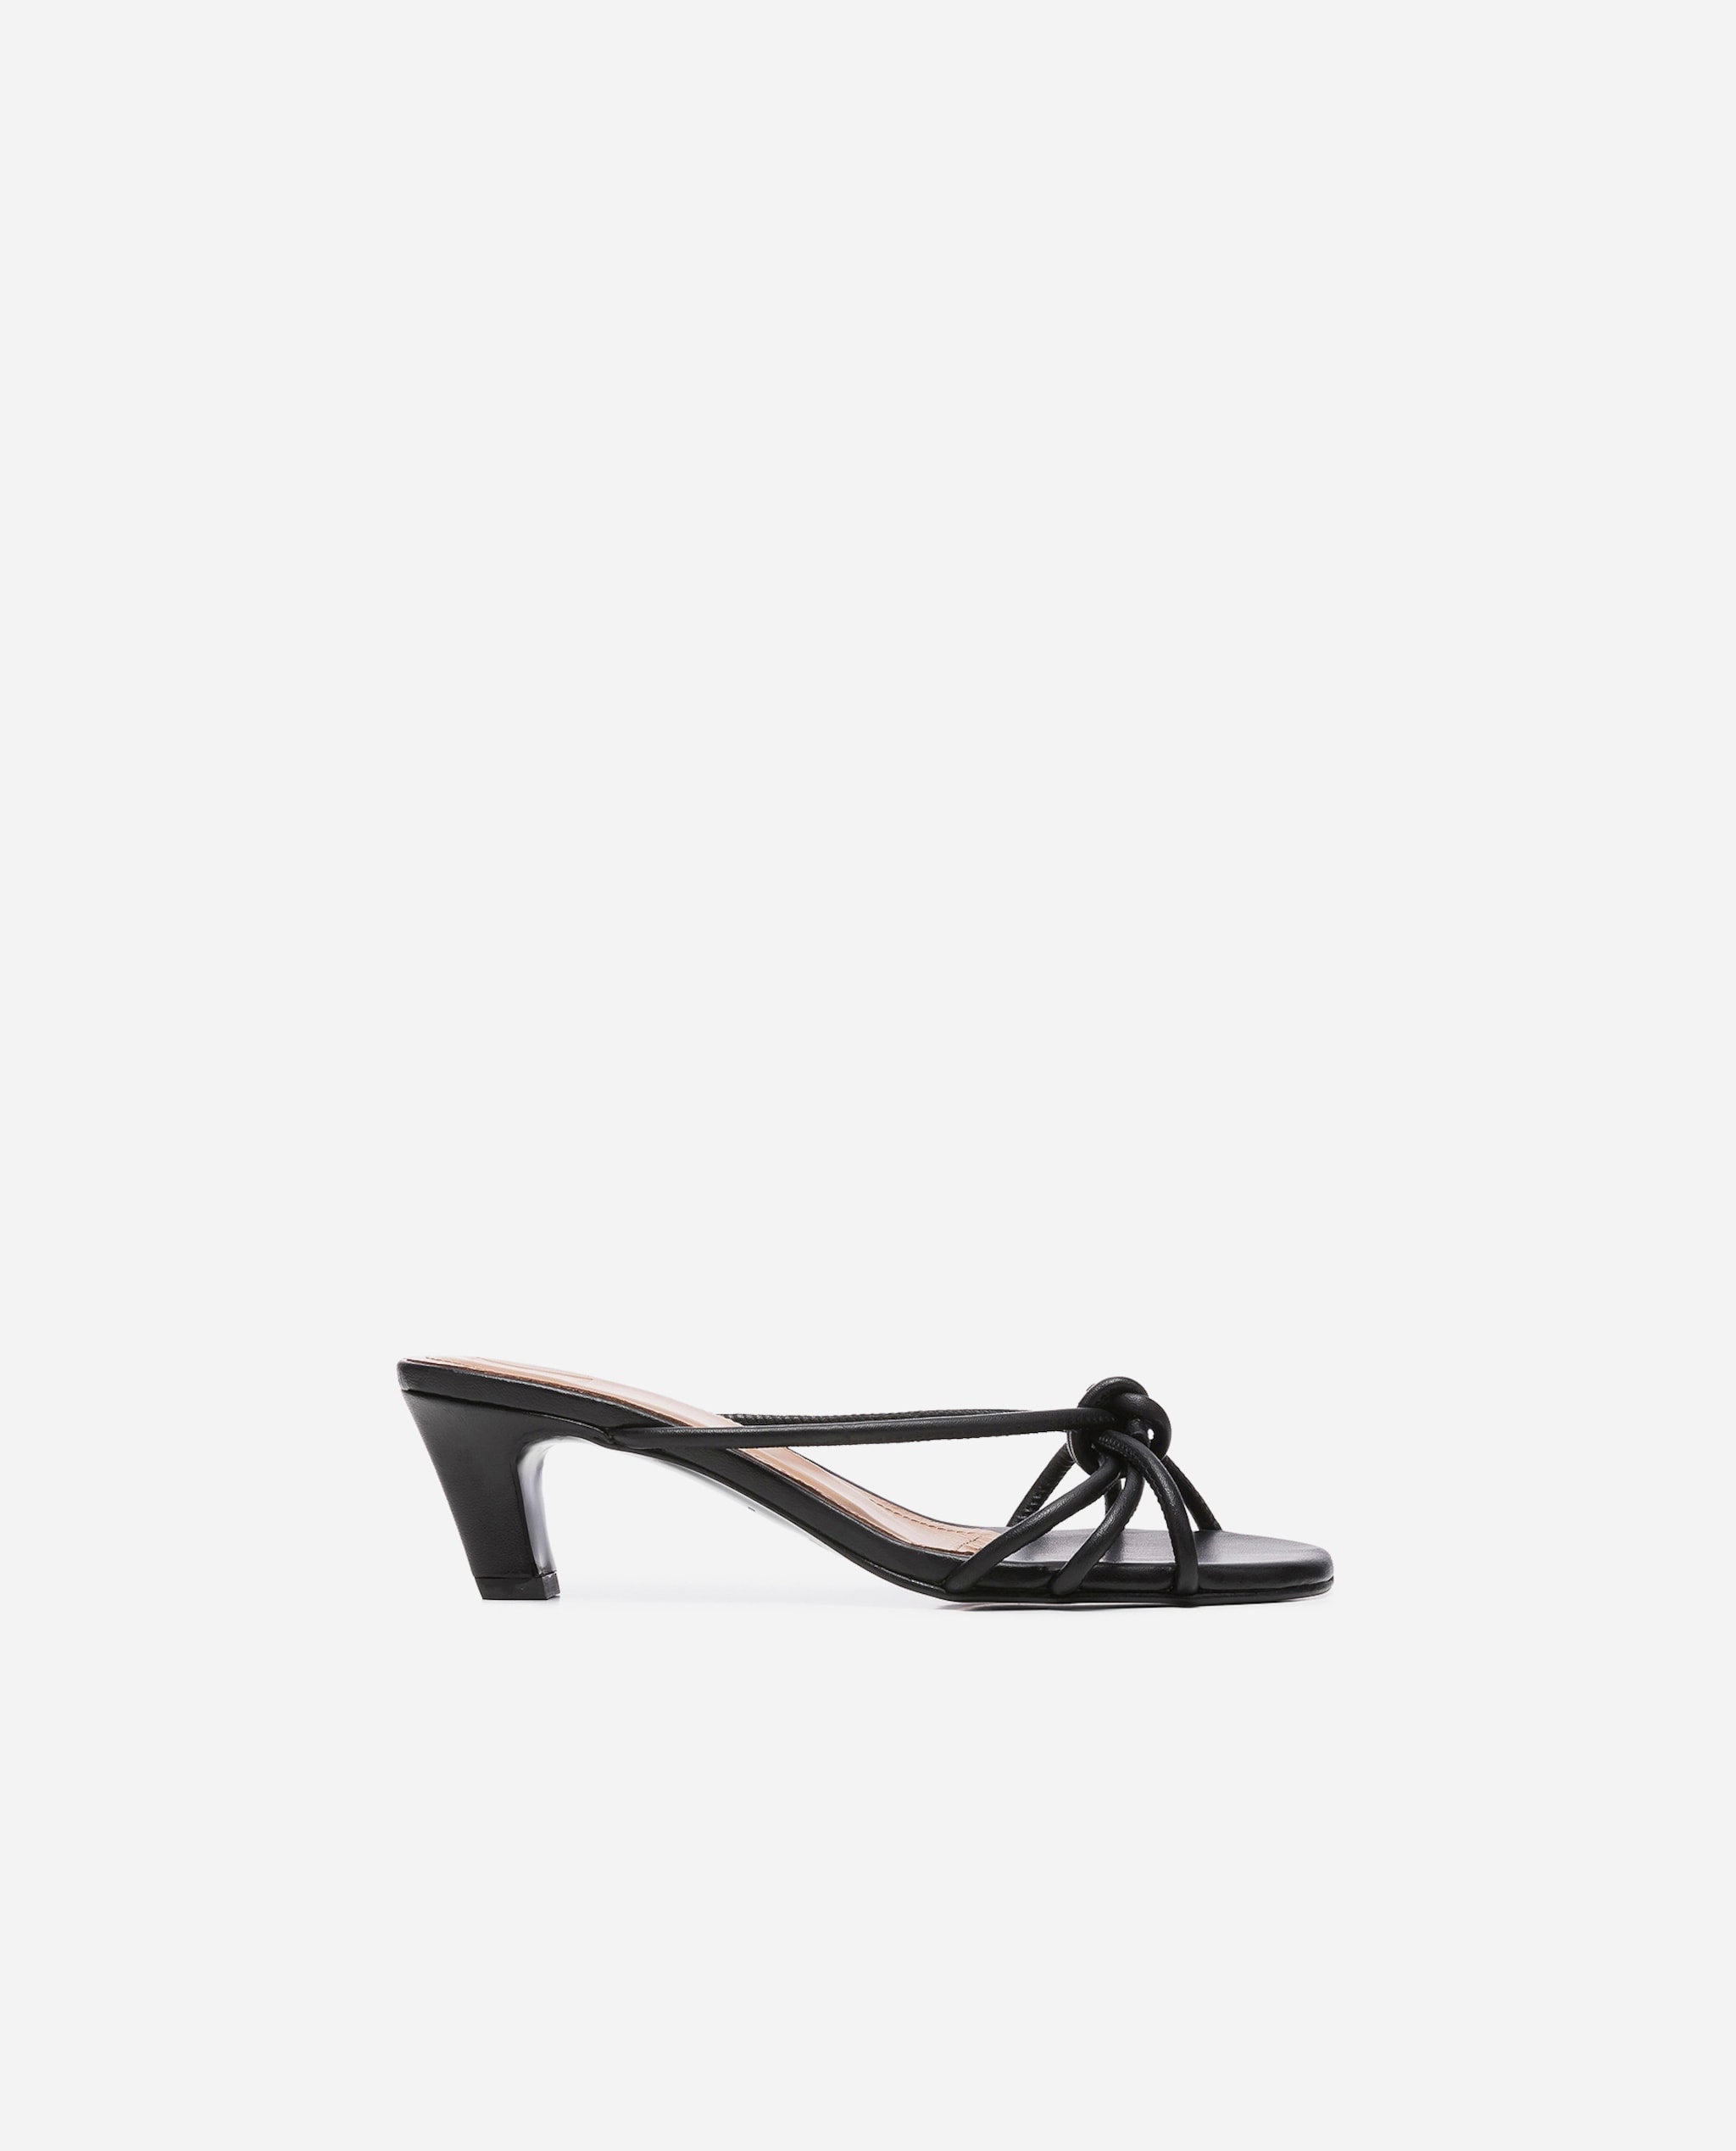 Eunice Leather Black Heeled Sandals 20010411301-001 - 7